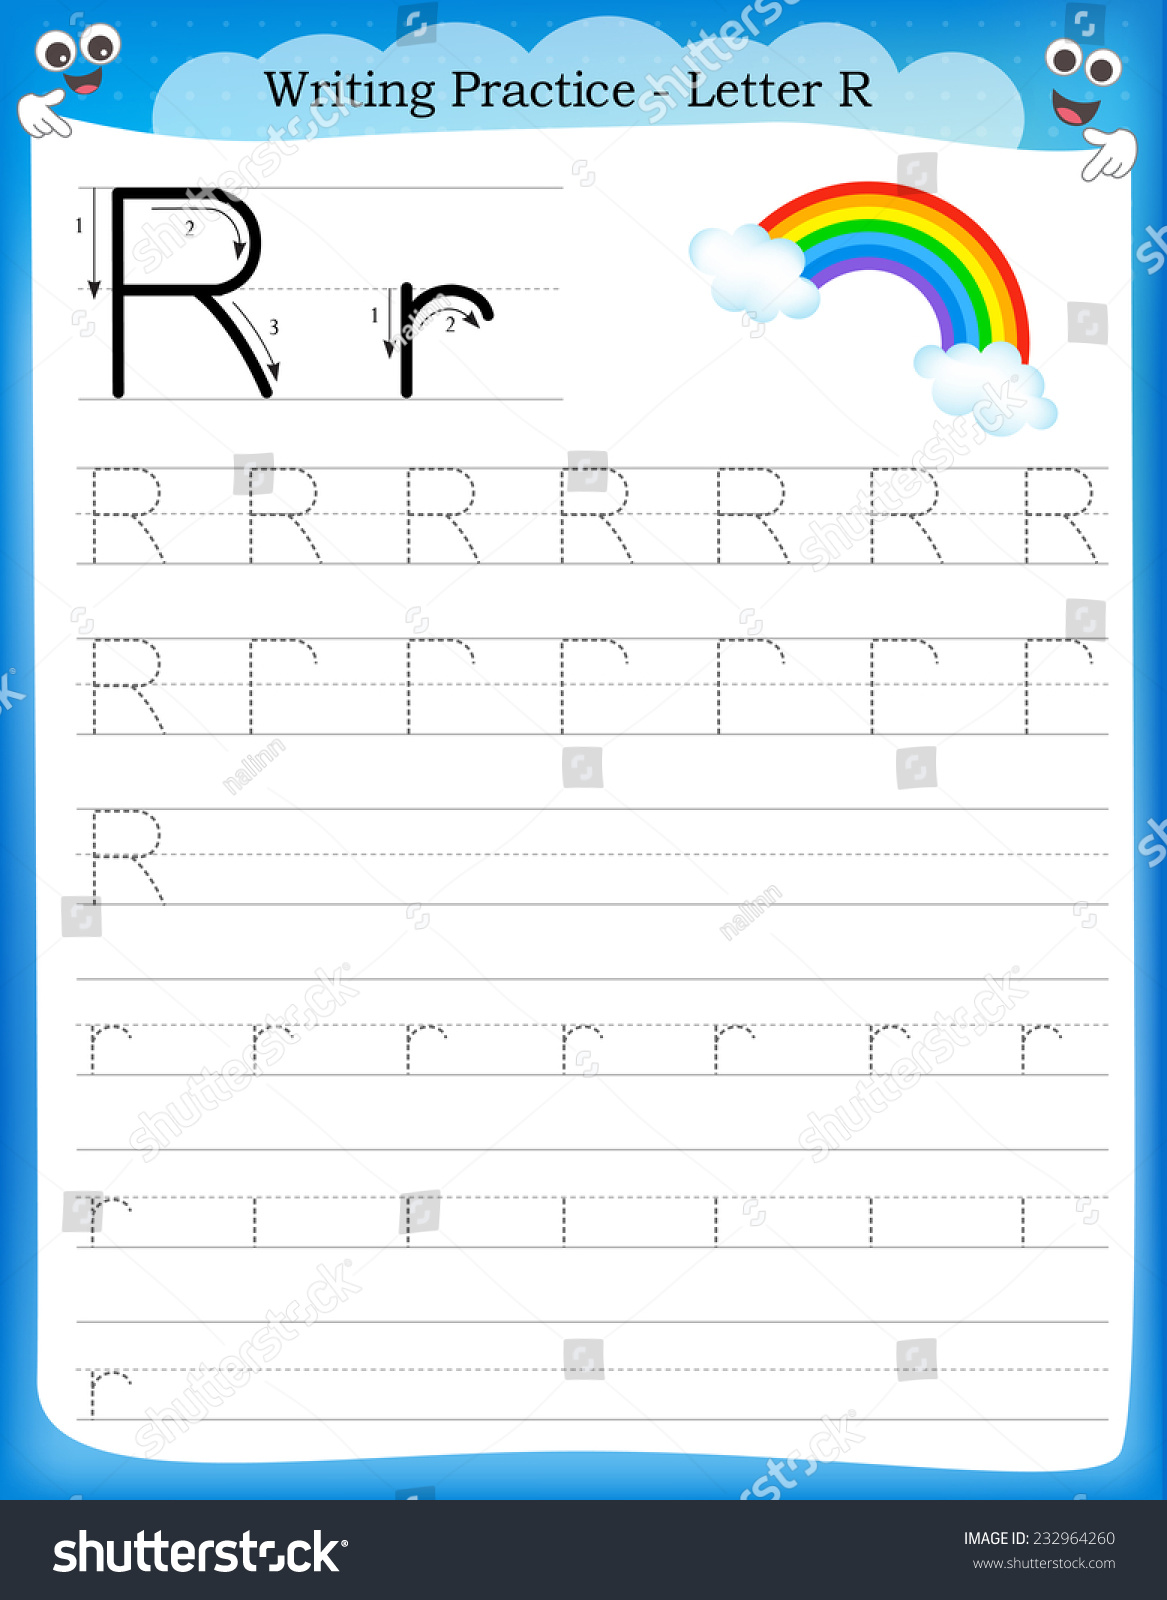 letter-r-practice